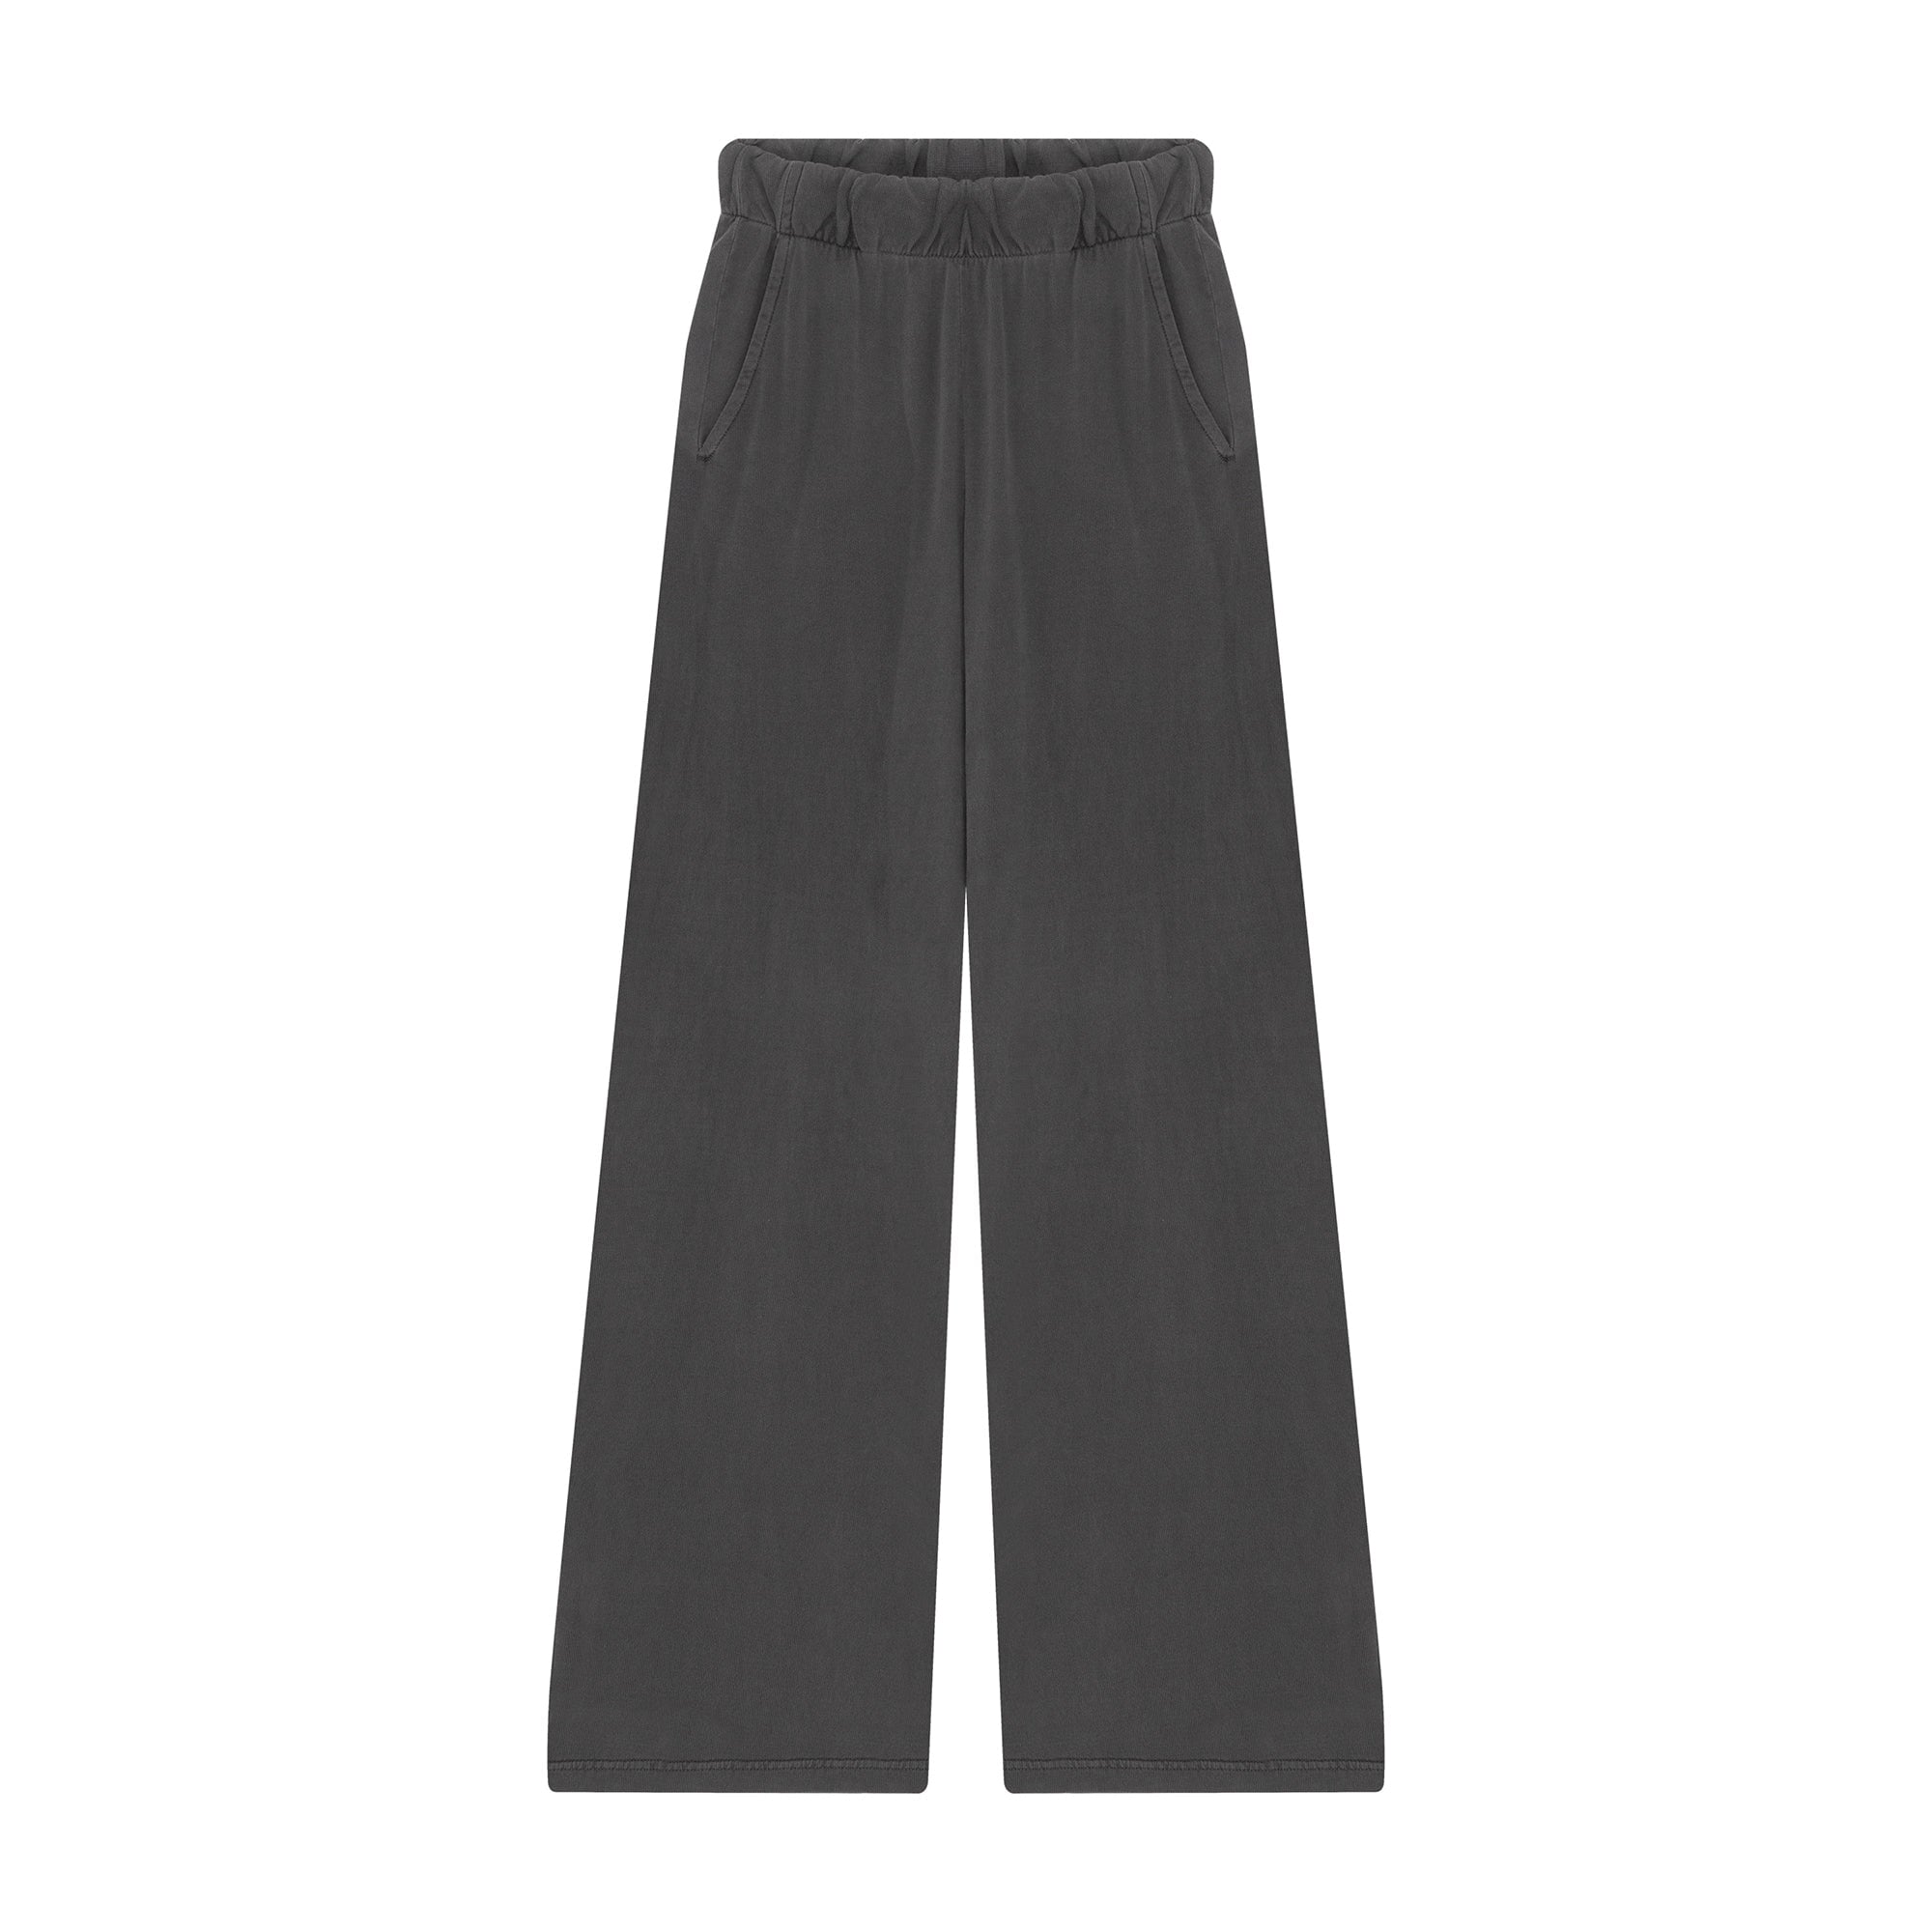 Women's Lounge Pants | Green | Fits Waist Size 28